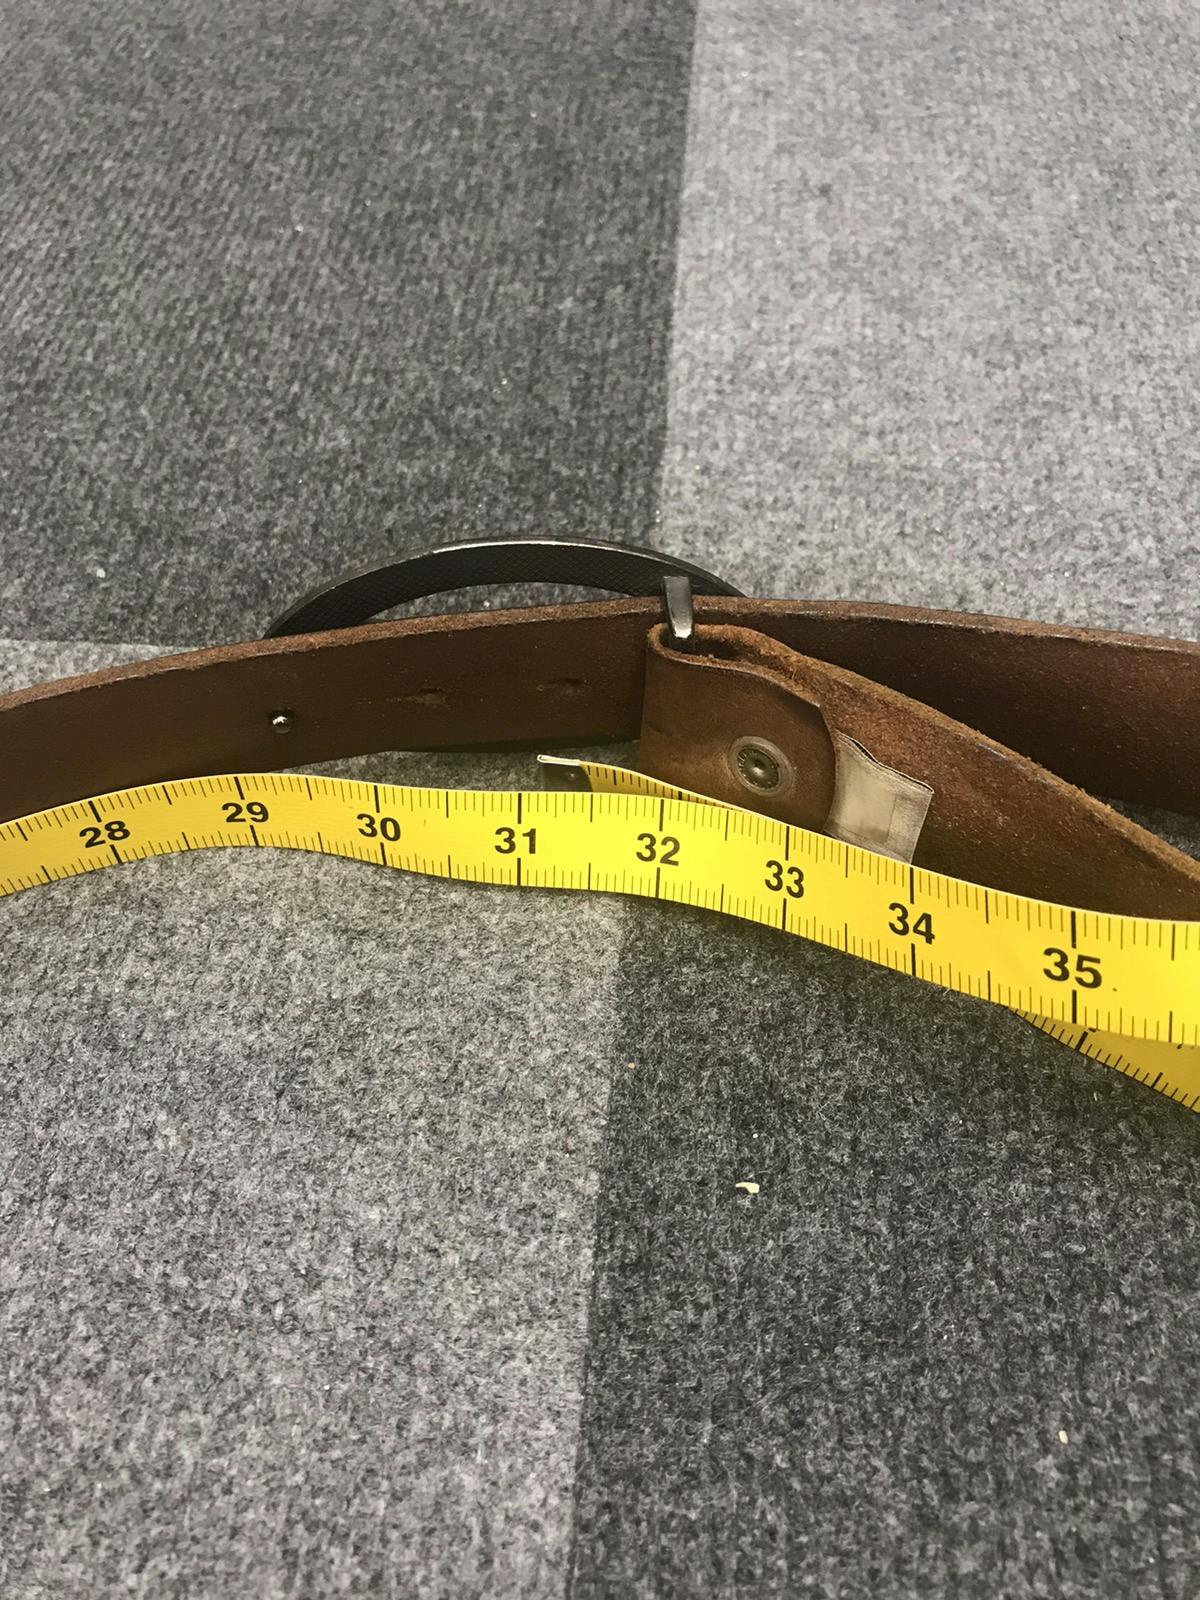 D&G Genuine Leather Belt(31-35) - 10